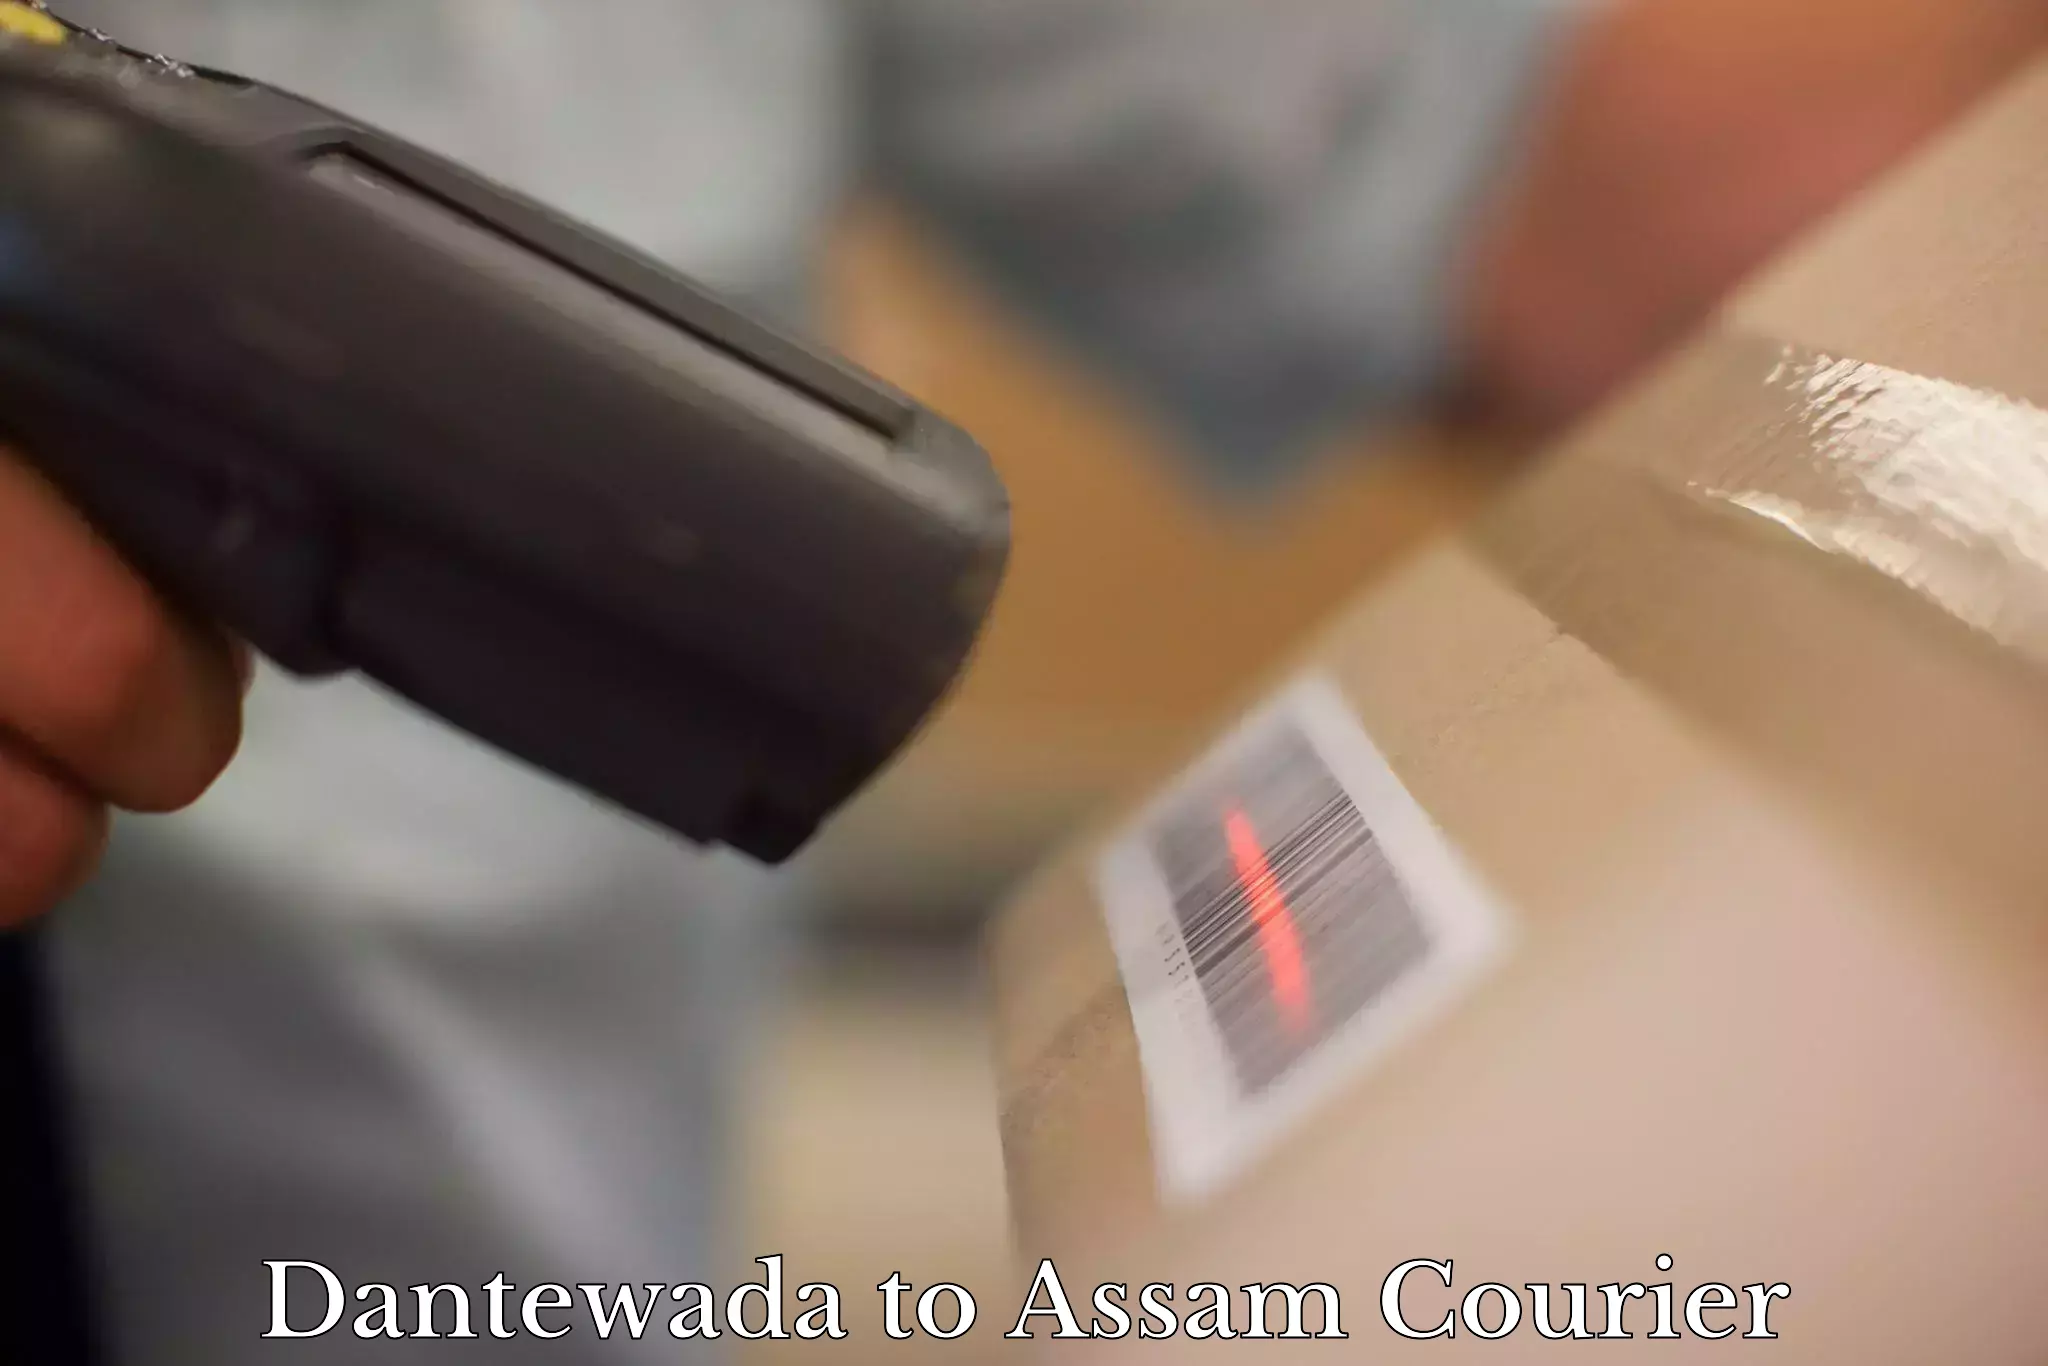 Trusted relocation experts Dantewada to Assam